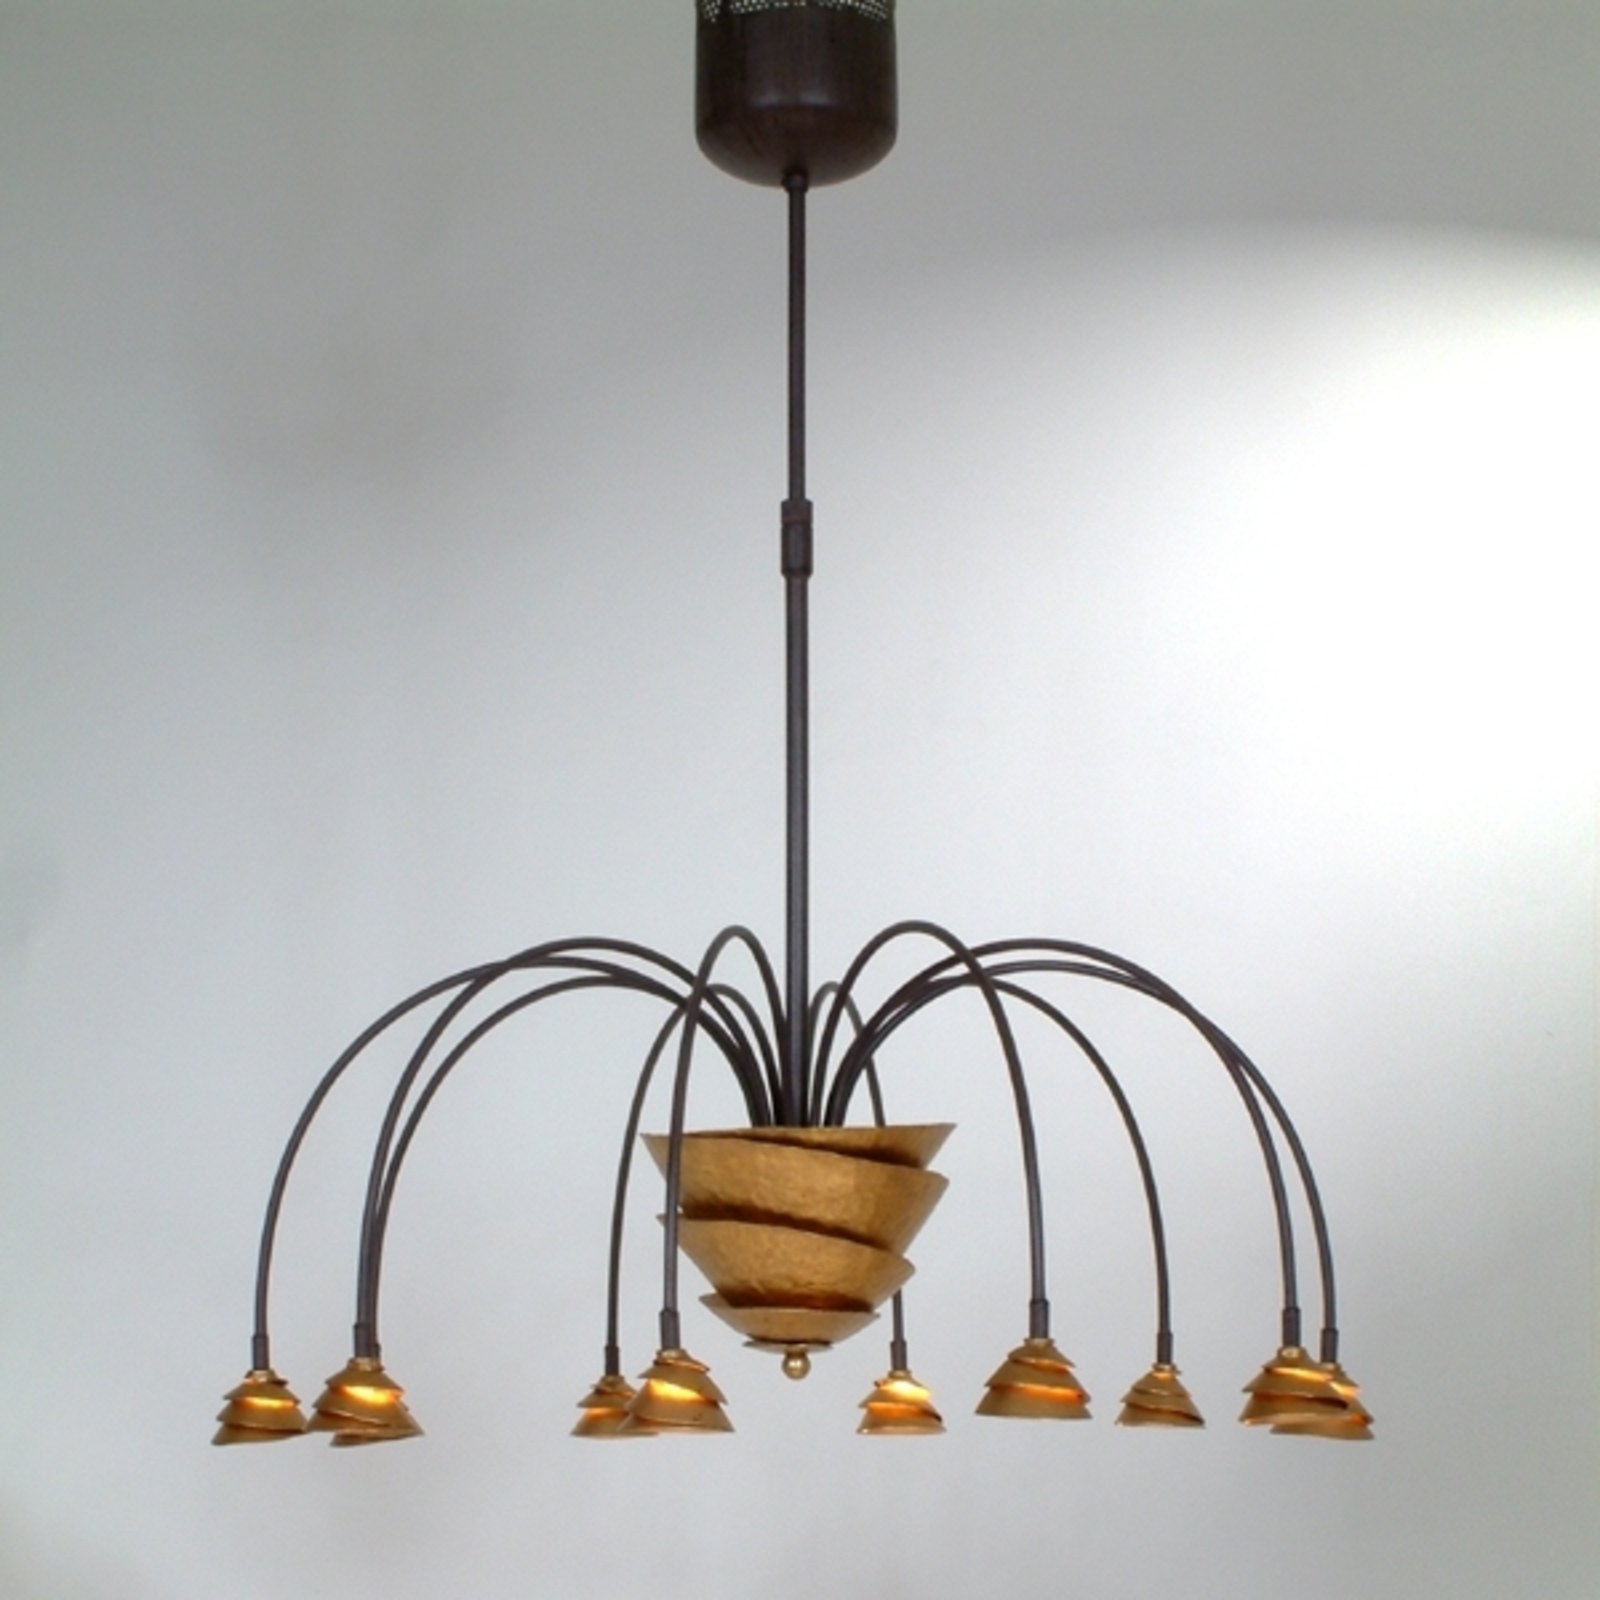 LED függőlámpa Fontaine vas-barna-arany